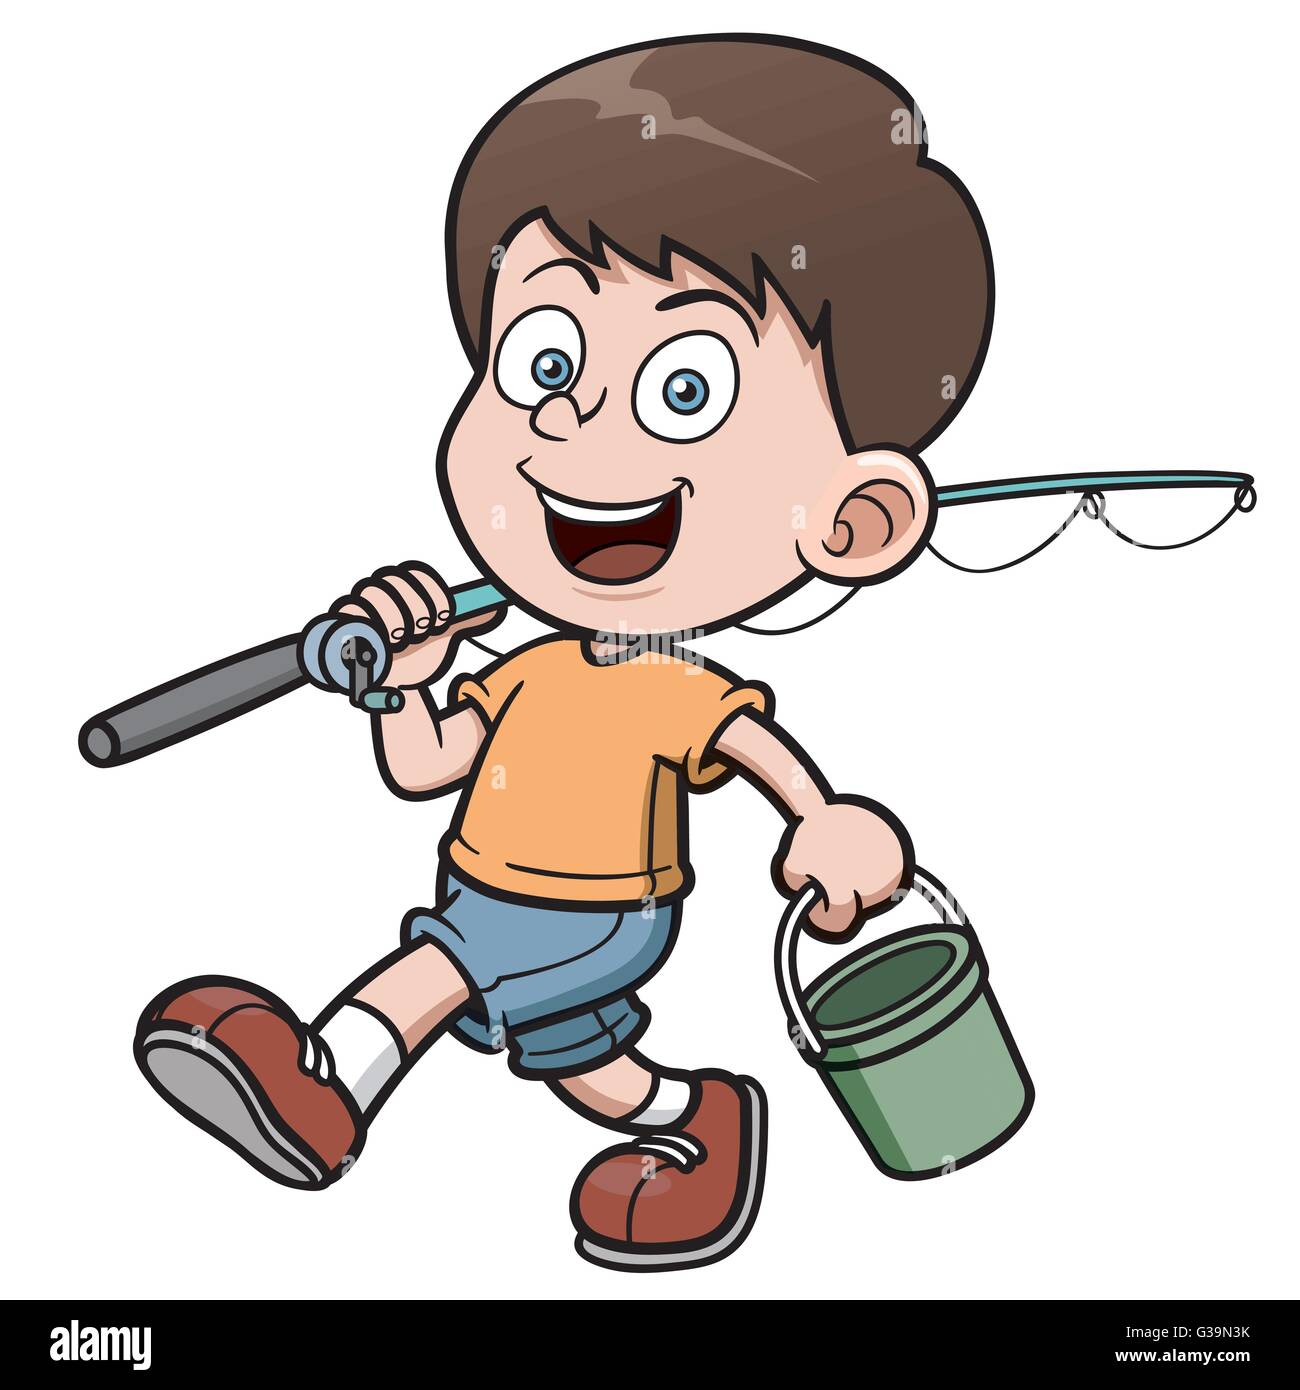 Premium Vector  Illustration of cartoon boy fishing